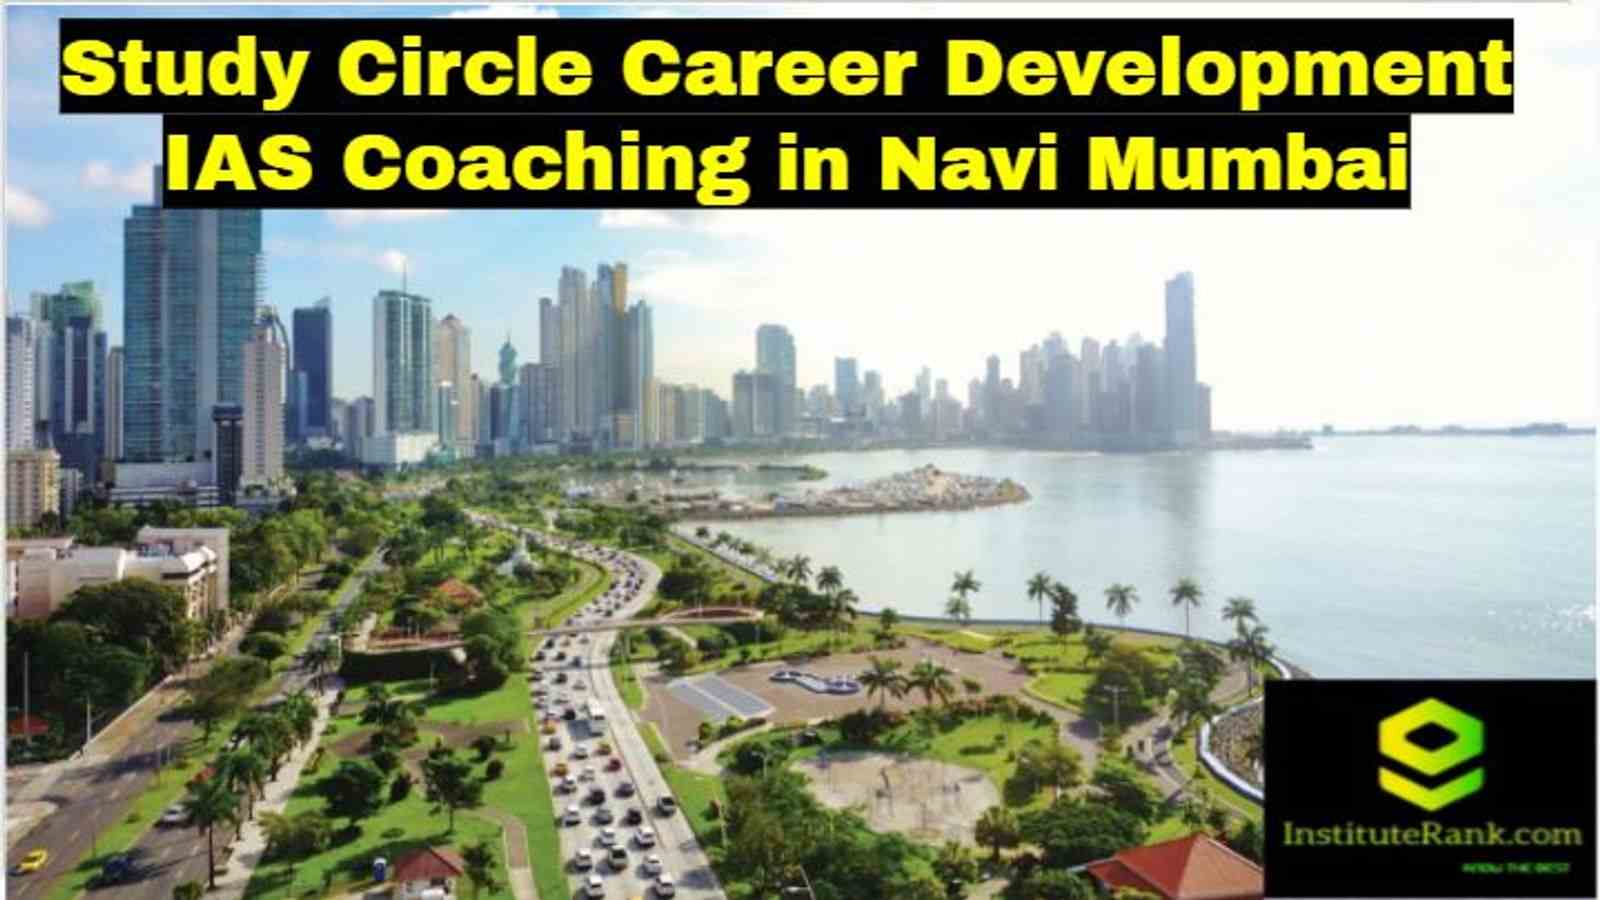 Study Circle Career Development IAS Coaching in Navi Mumbai